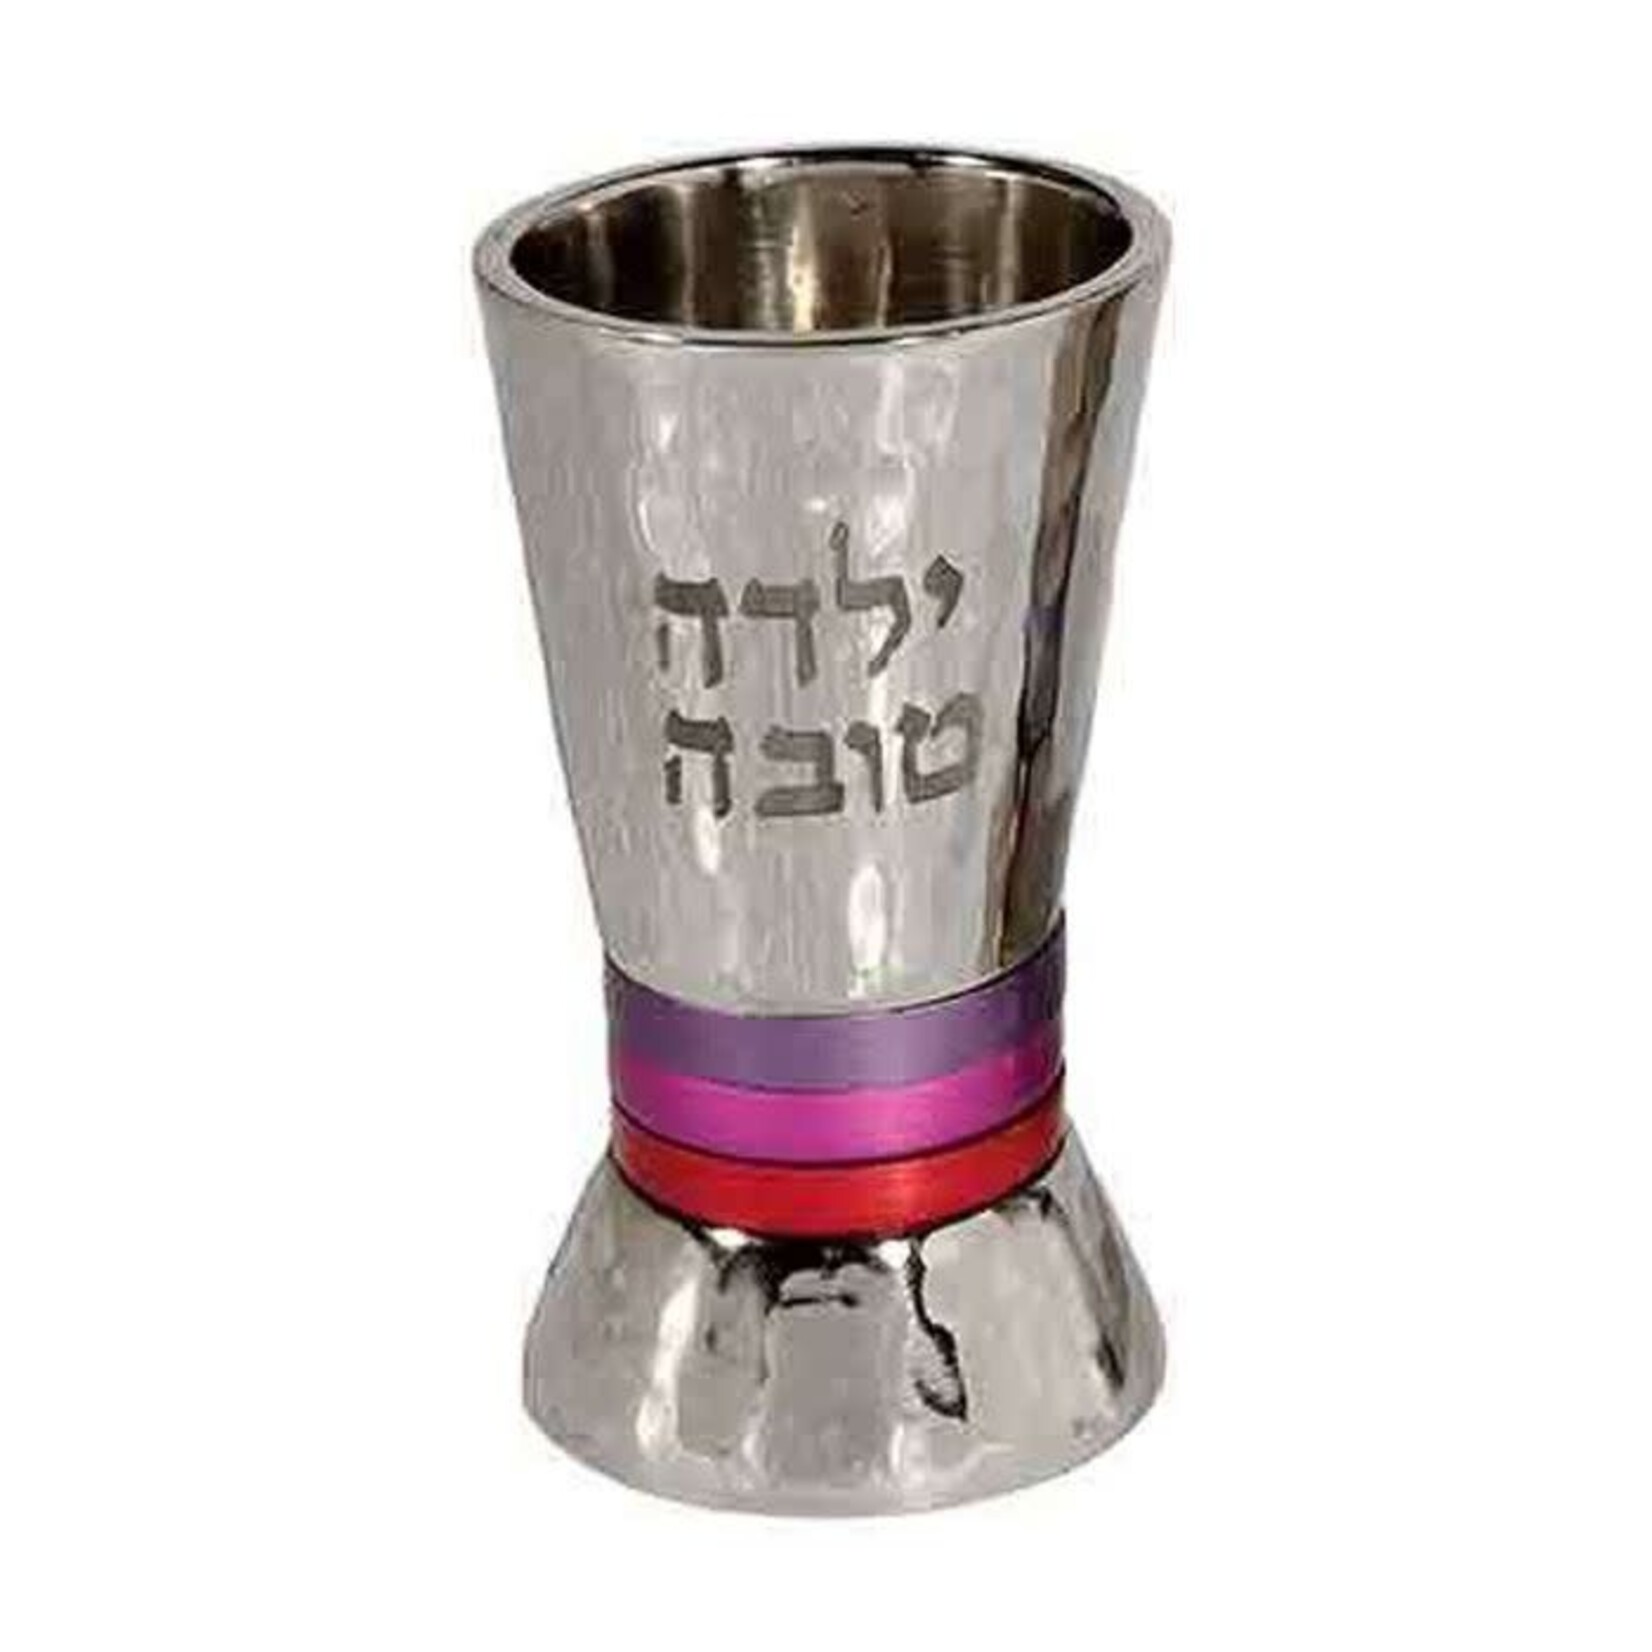 Hammered Yalda Tova Cup- Red/Pink rings